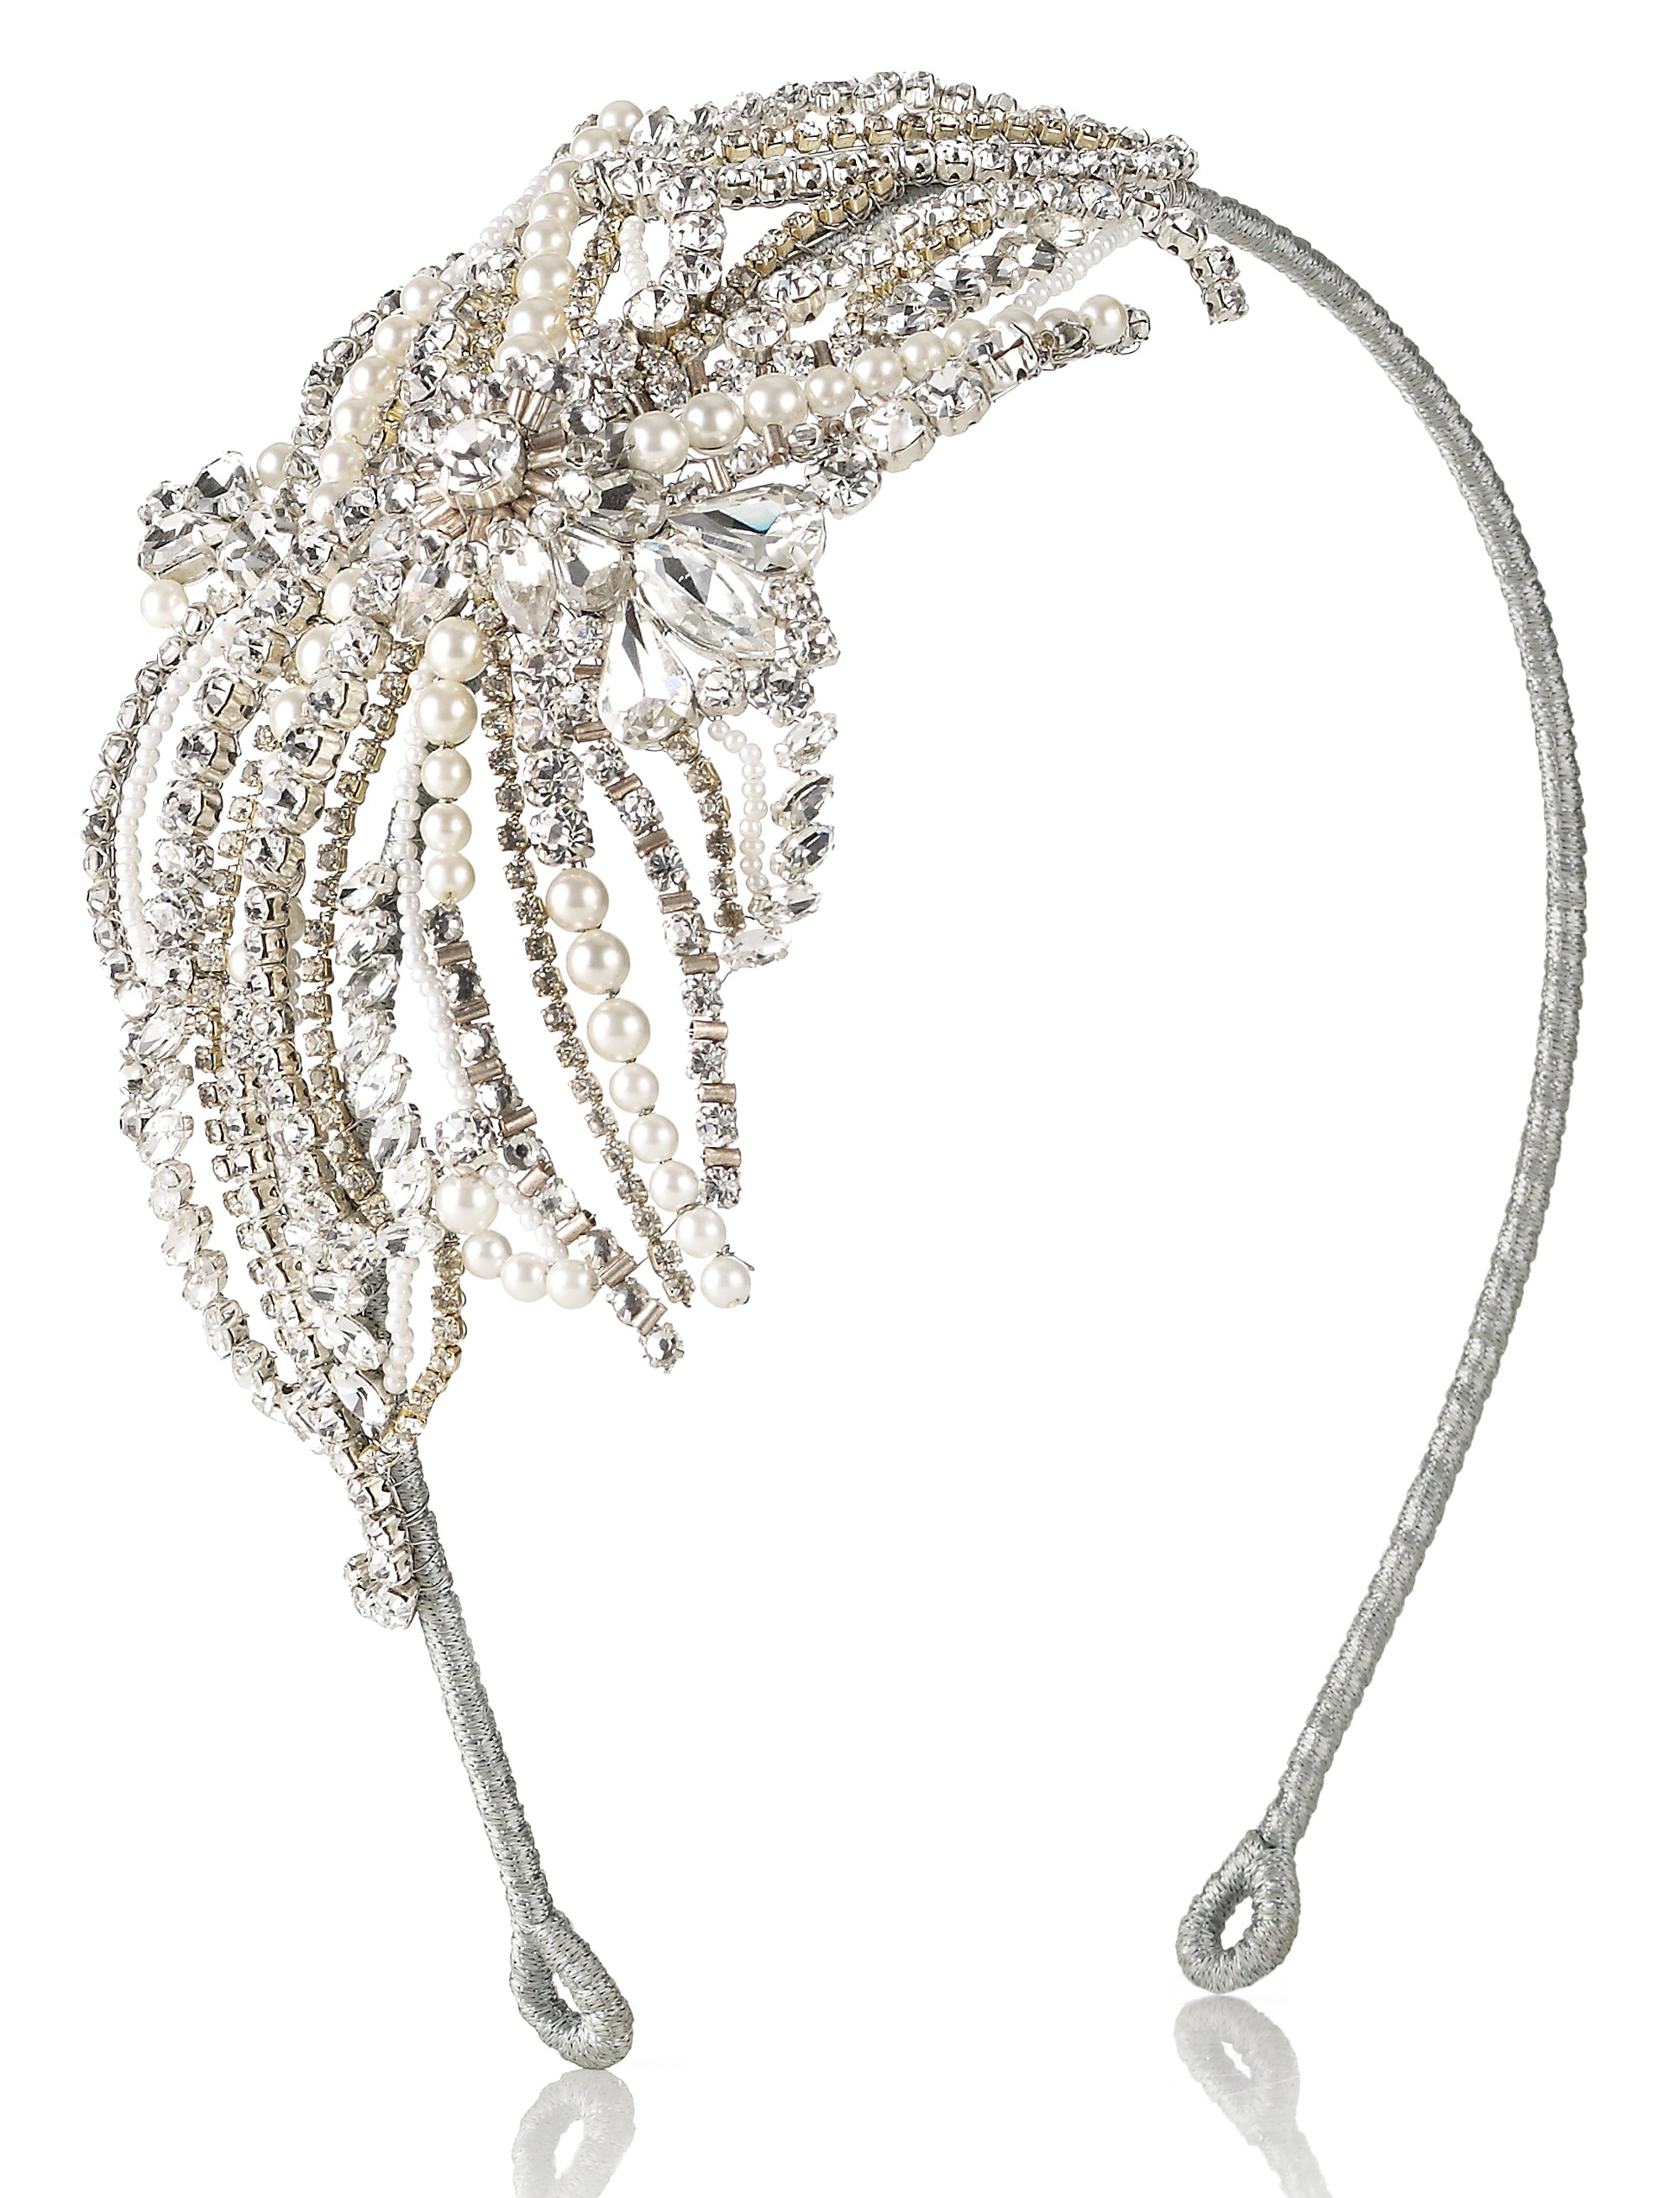 Izabella designer wedding headpiece by Caroline Castigliano